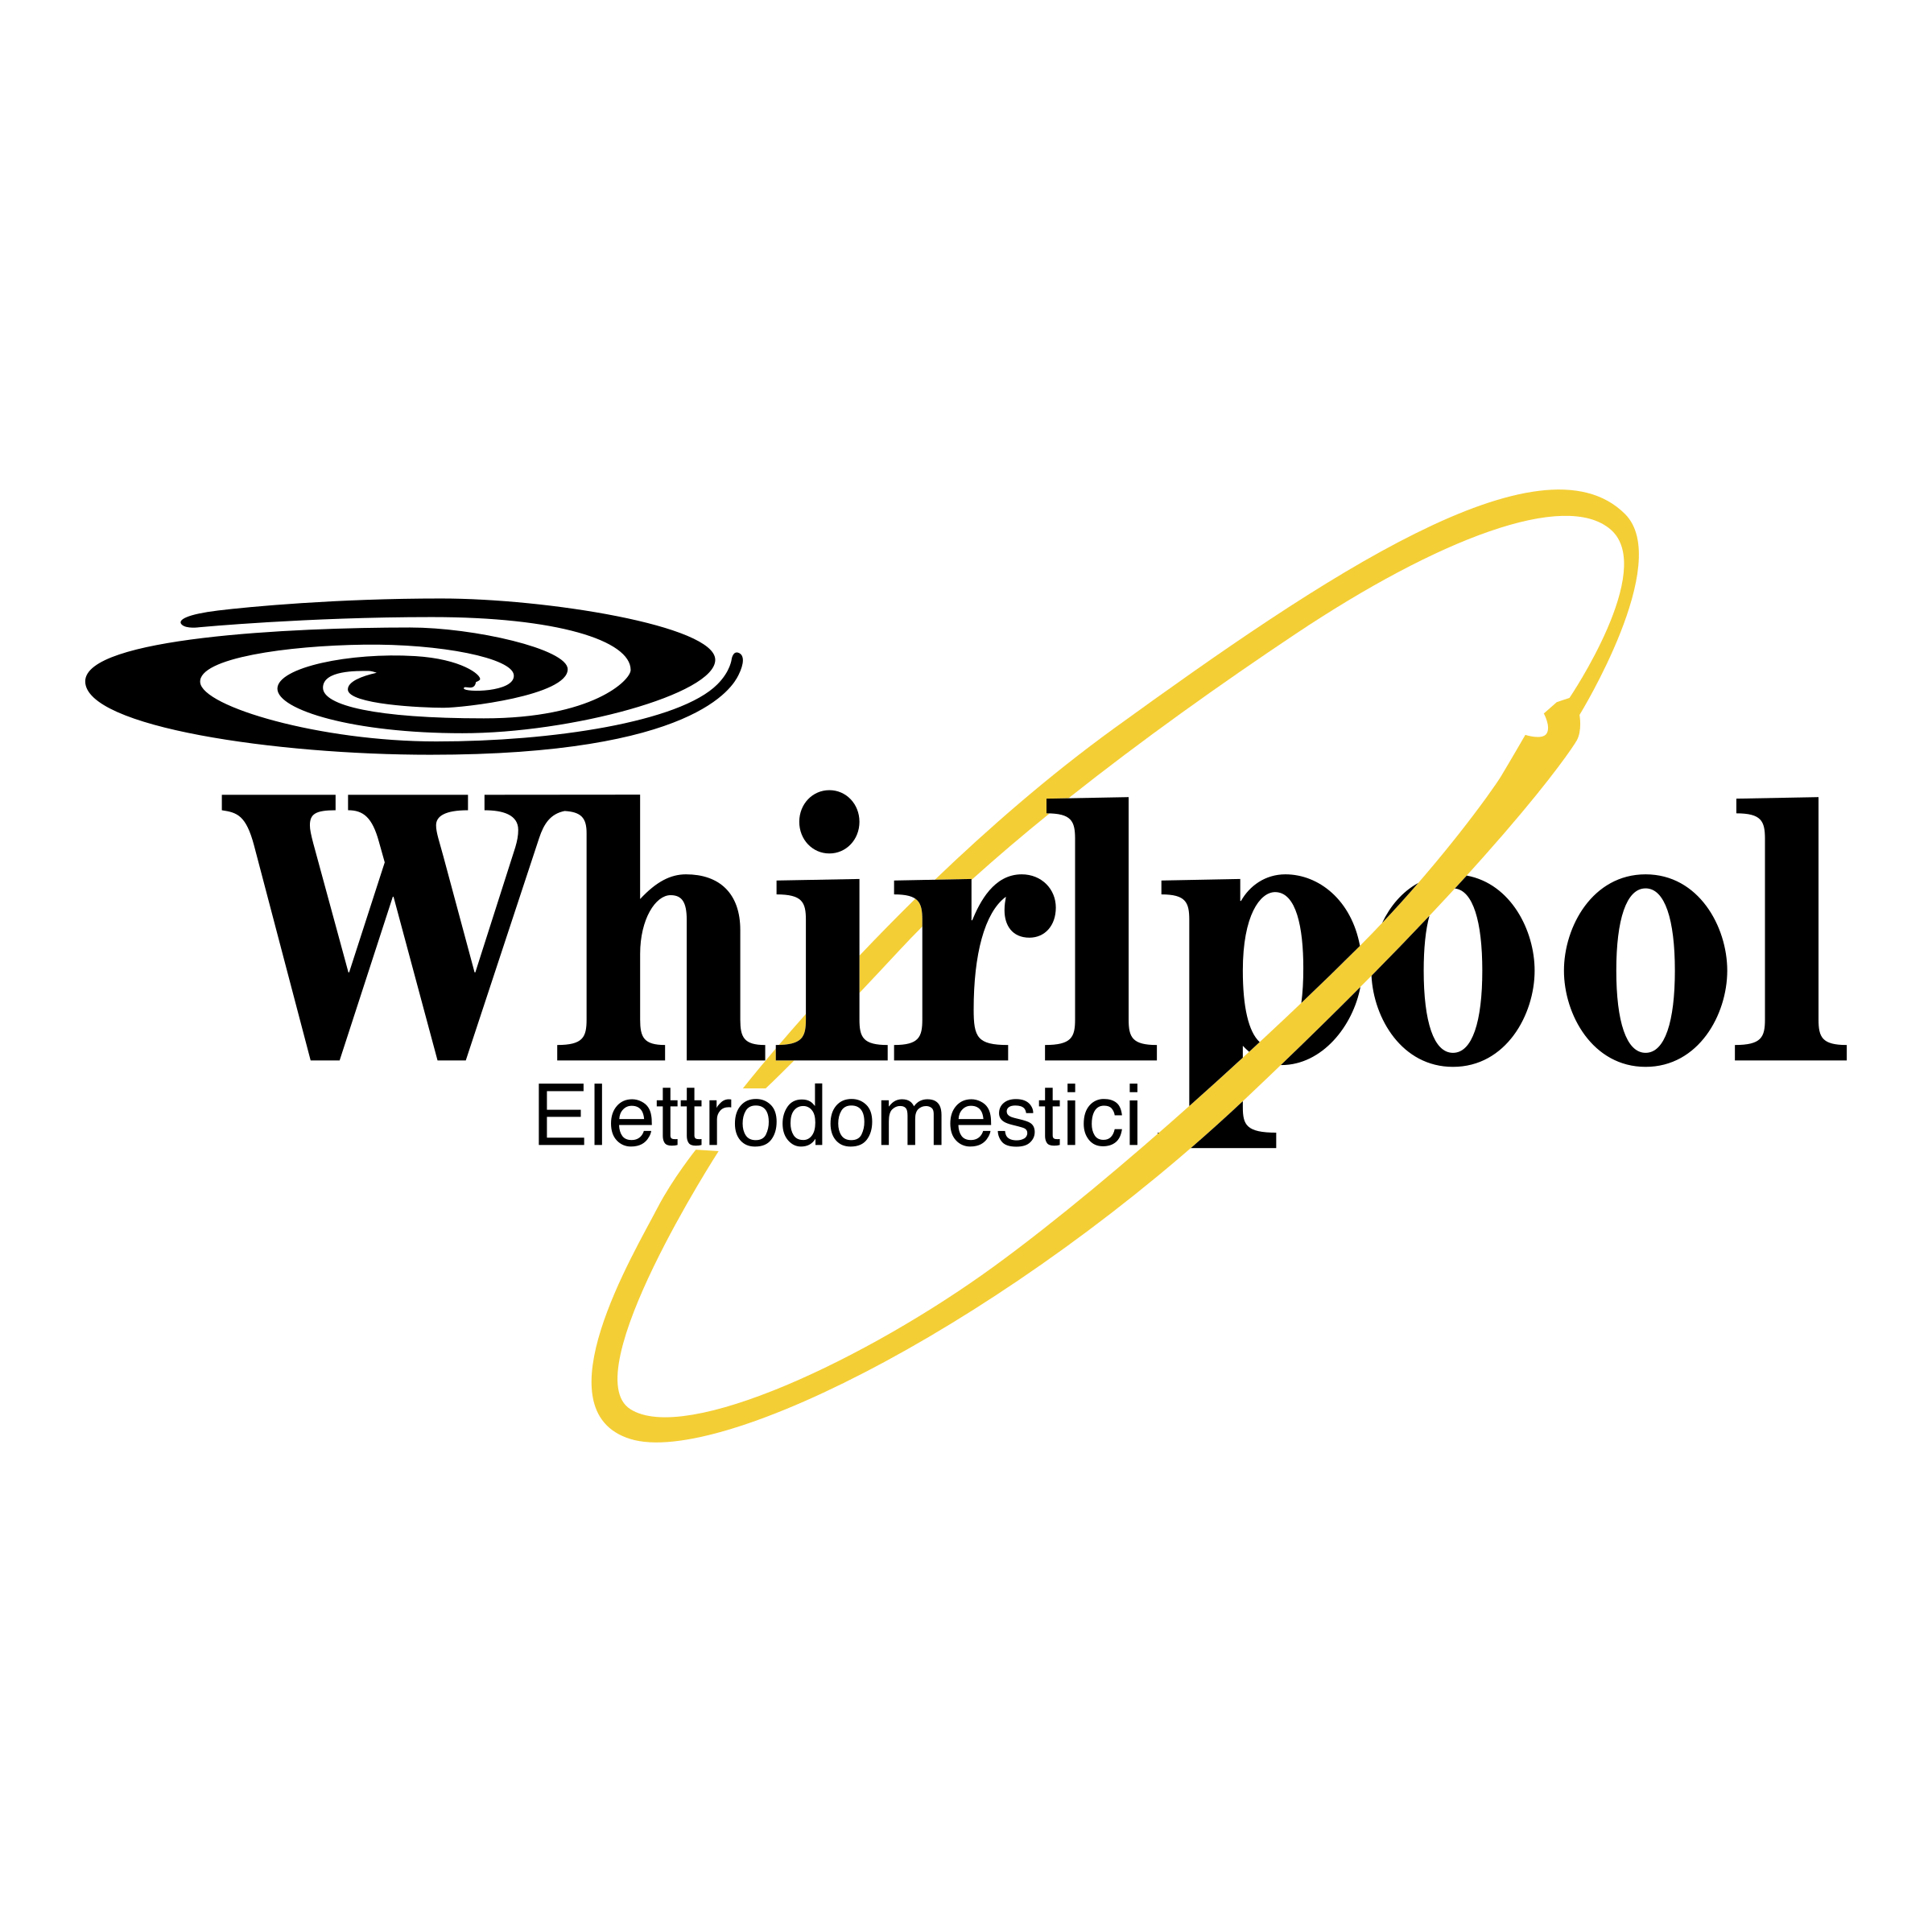 Whirpool Logo - Whirlpool Logo PNG Transparent & SVG Vector - Freebie Supply